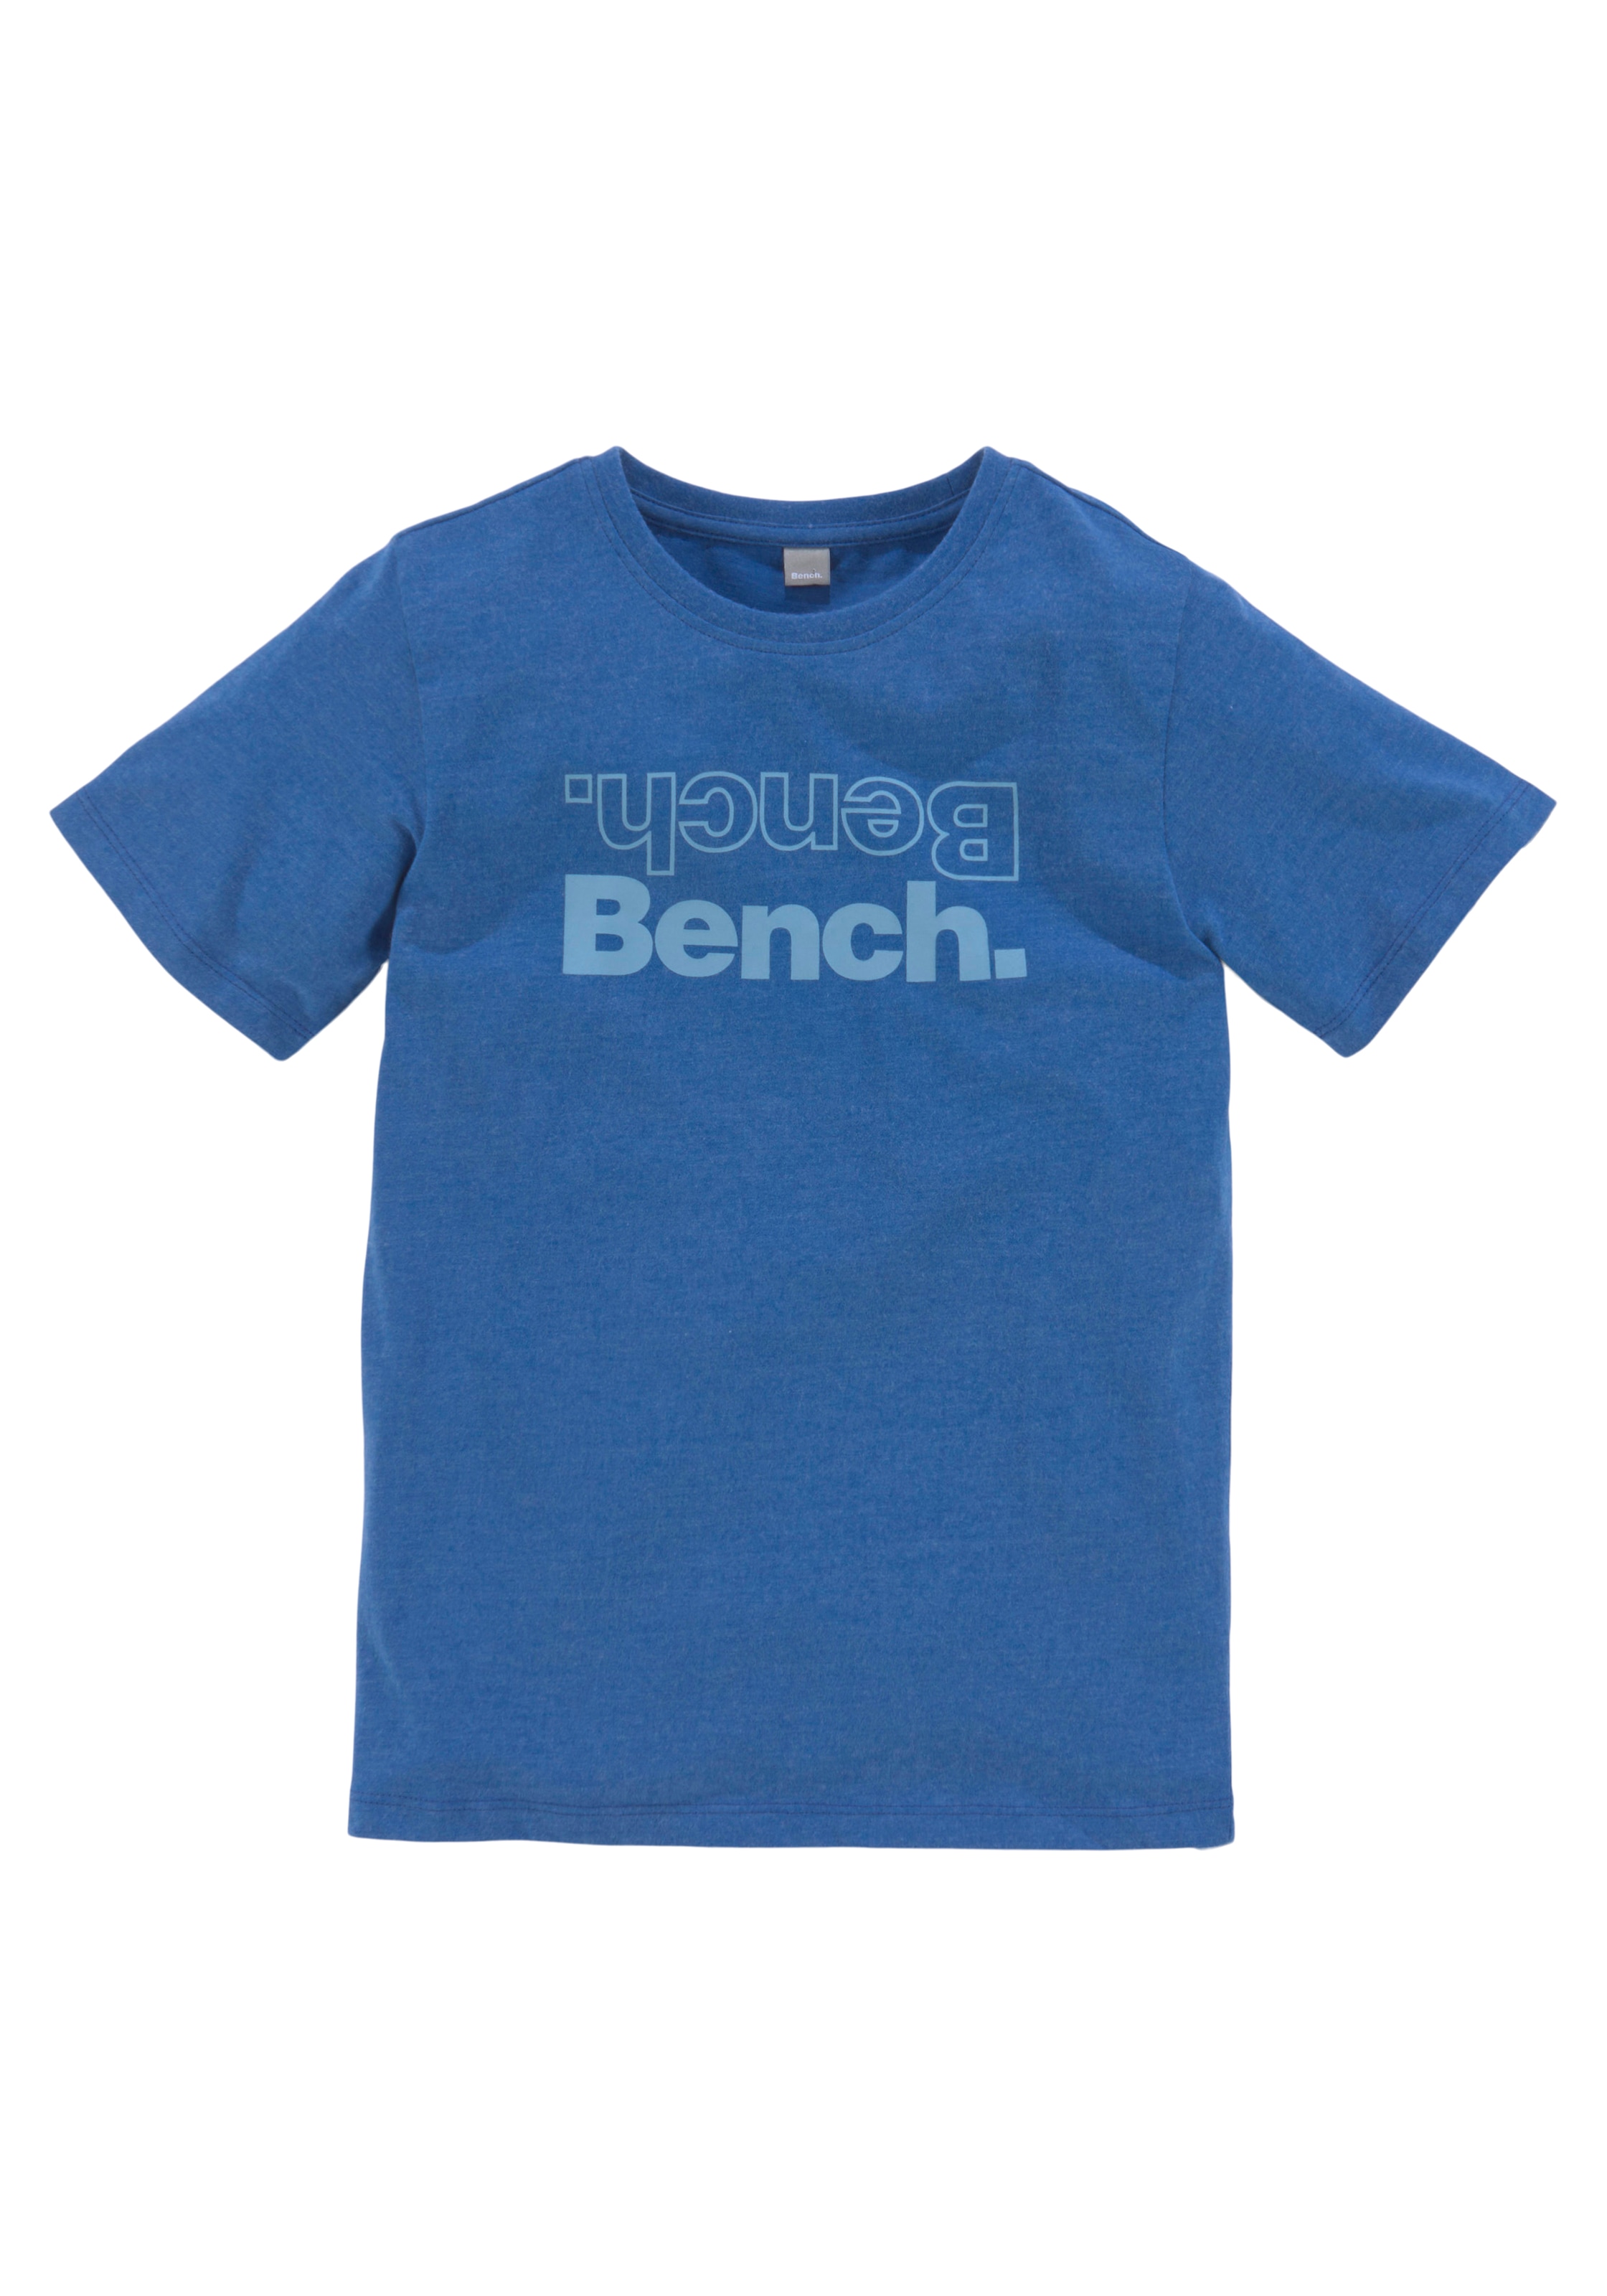 bei Brustdruck« coolem »mit Bench. T-Shirt